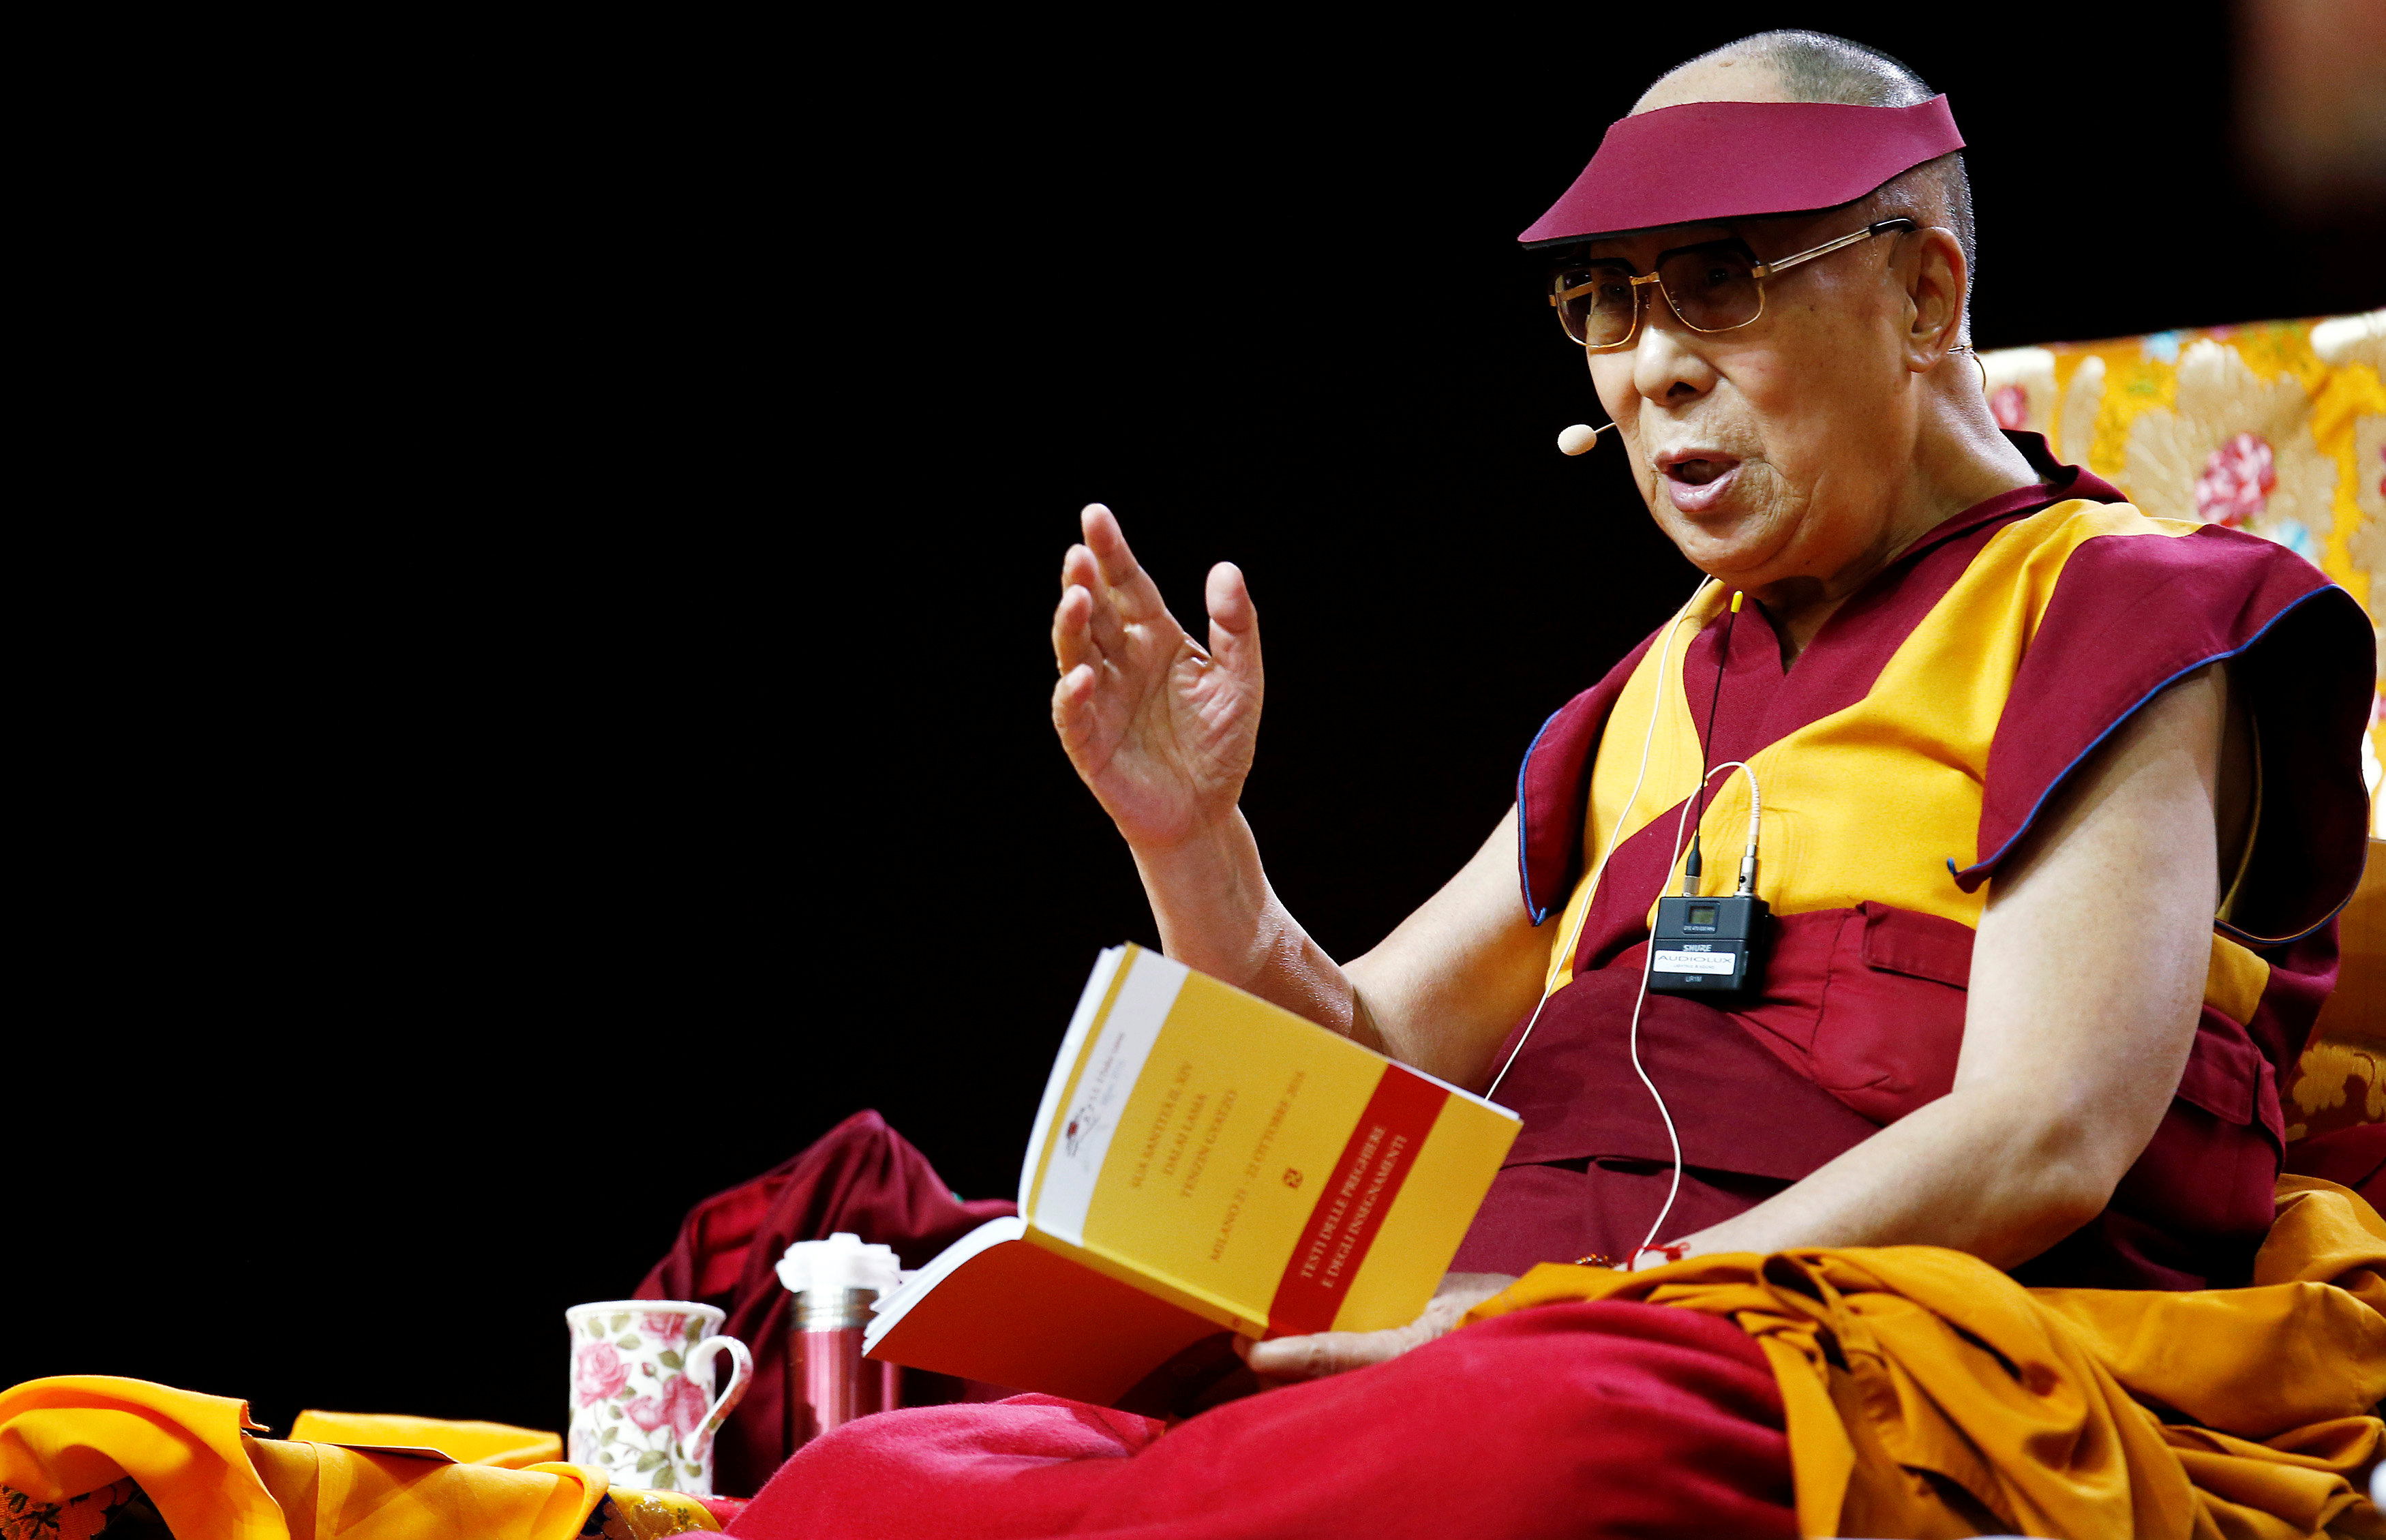 Tibet's exiled spiritual leader the Dalai Lama gestures during a teaching event in Milan, Italy October 21, 2016. REUTERS/Alessandro Garofalo